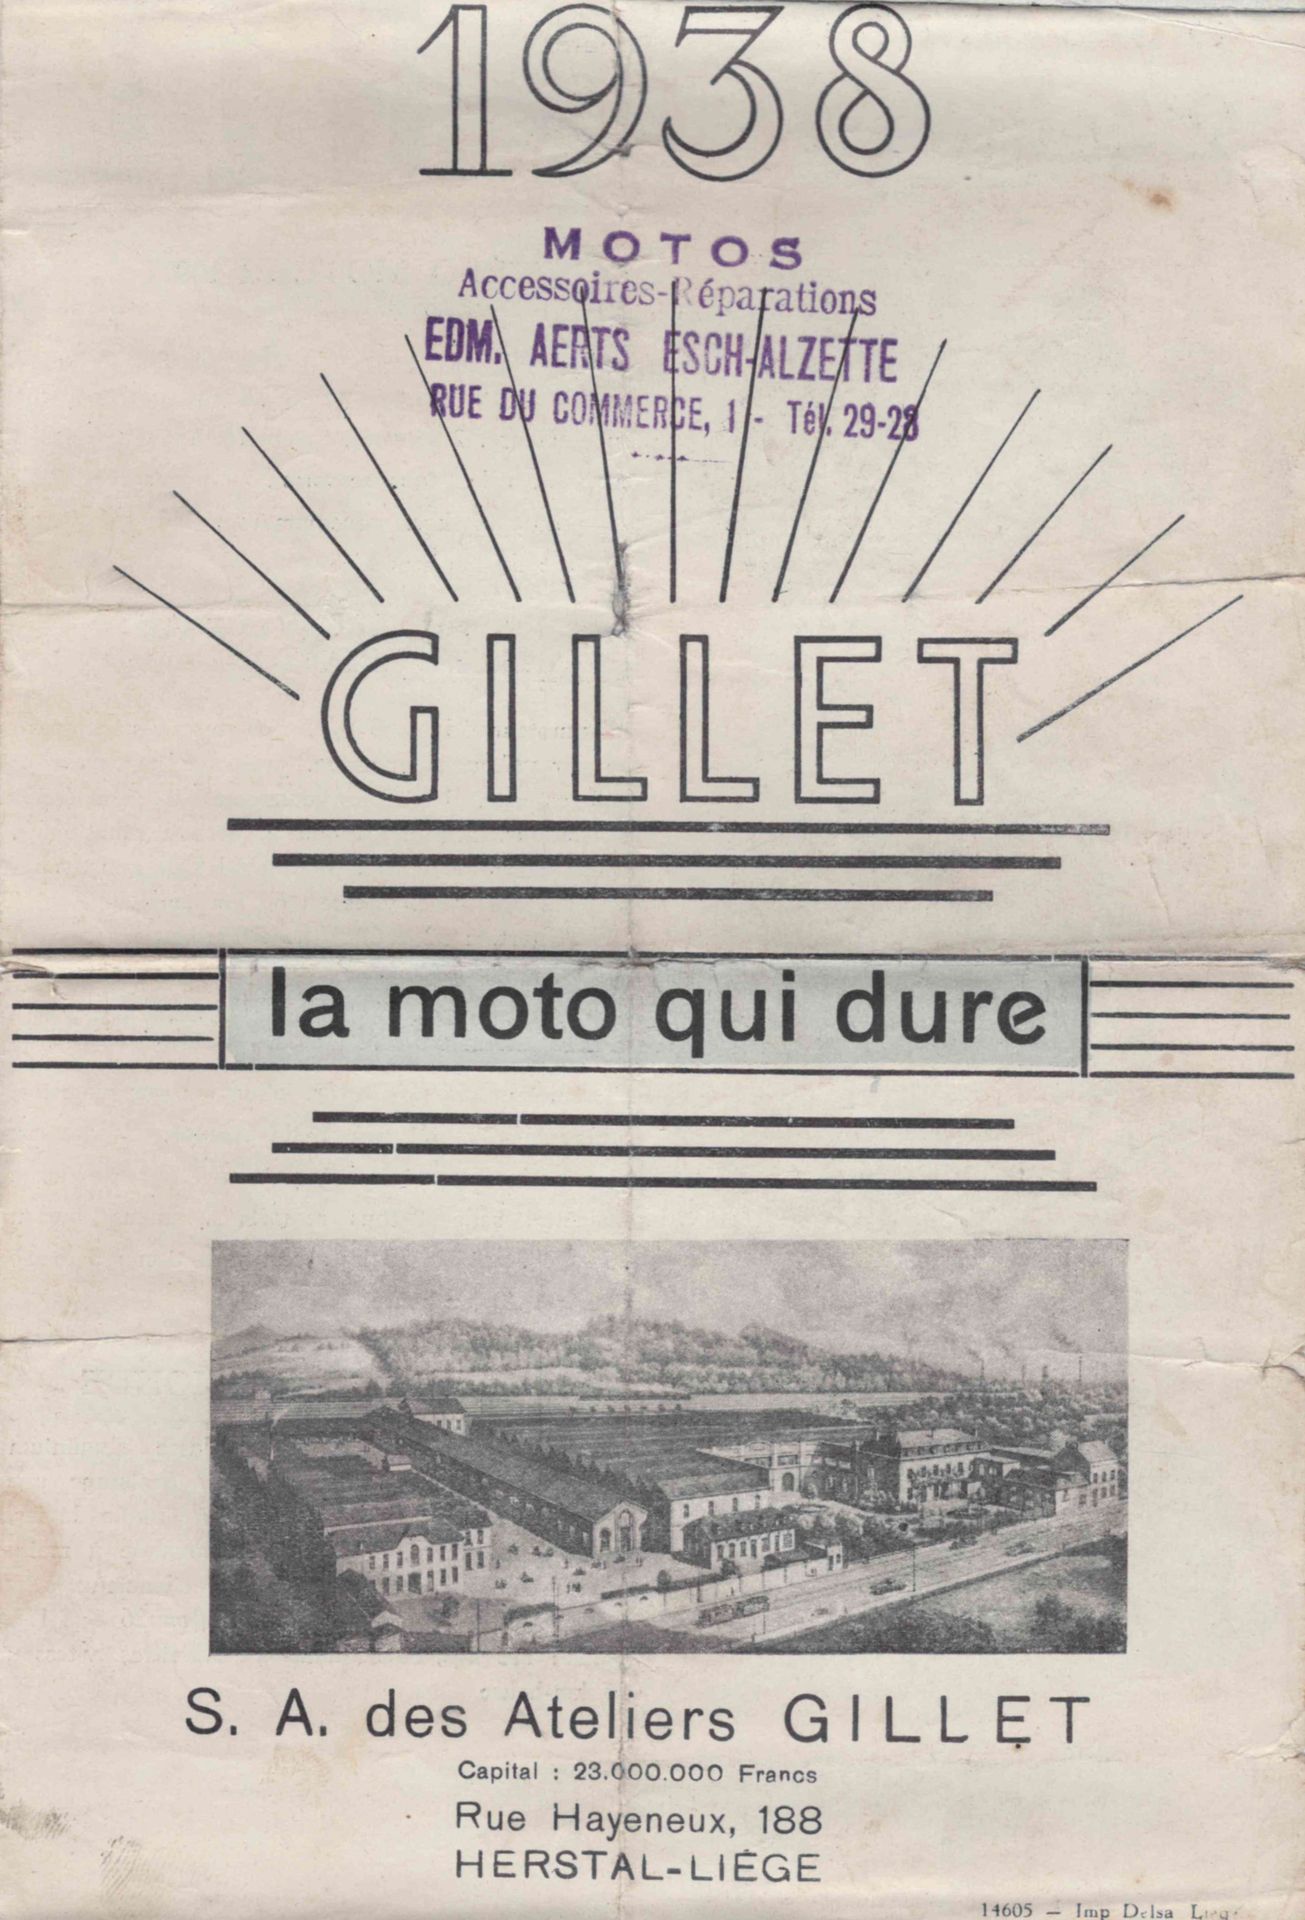 Null (BIKE) GILLET摩托车品牌在Hertstal-Liège的宣传专刊，上面印有 "MOTOS "公司的紫色标签。配件-准备工作。EDM。AER&hellip;